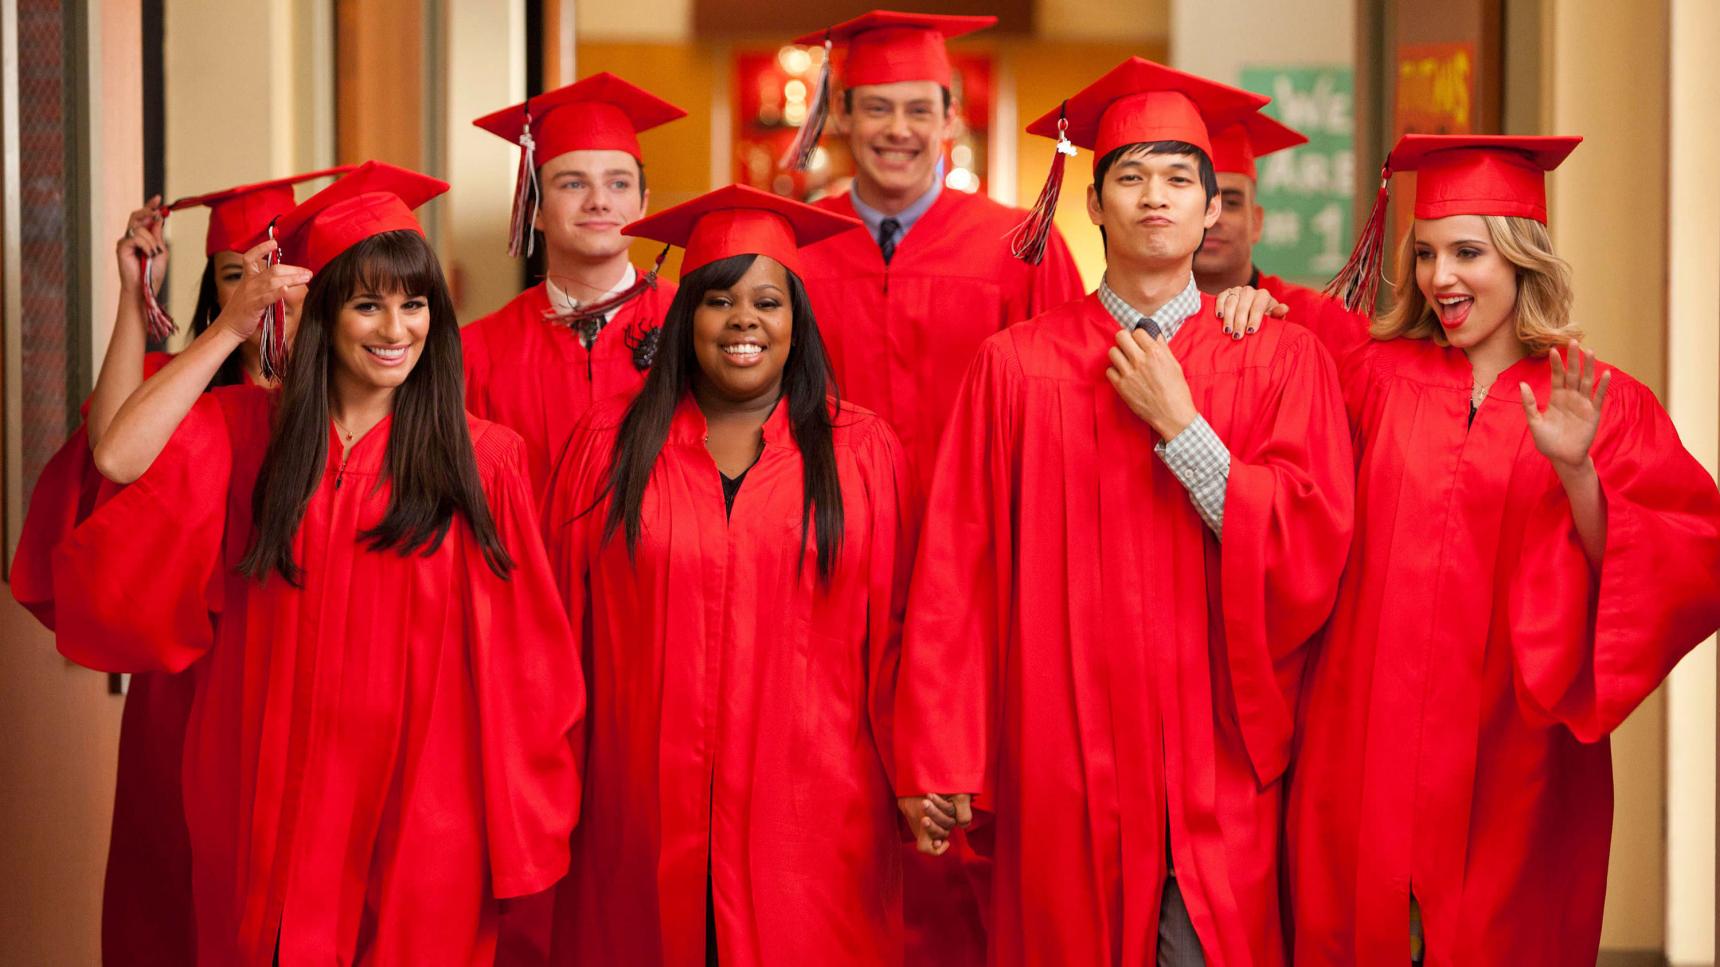 Poster del episodio 22 de Glee online